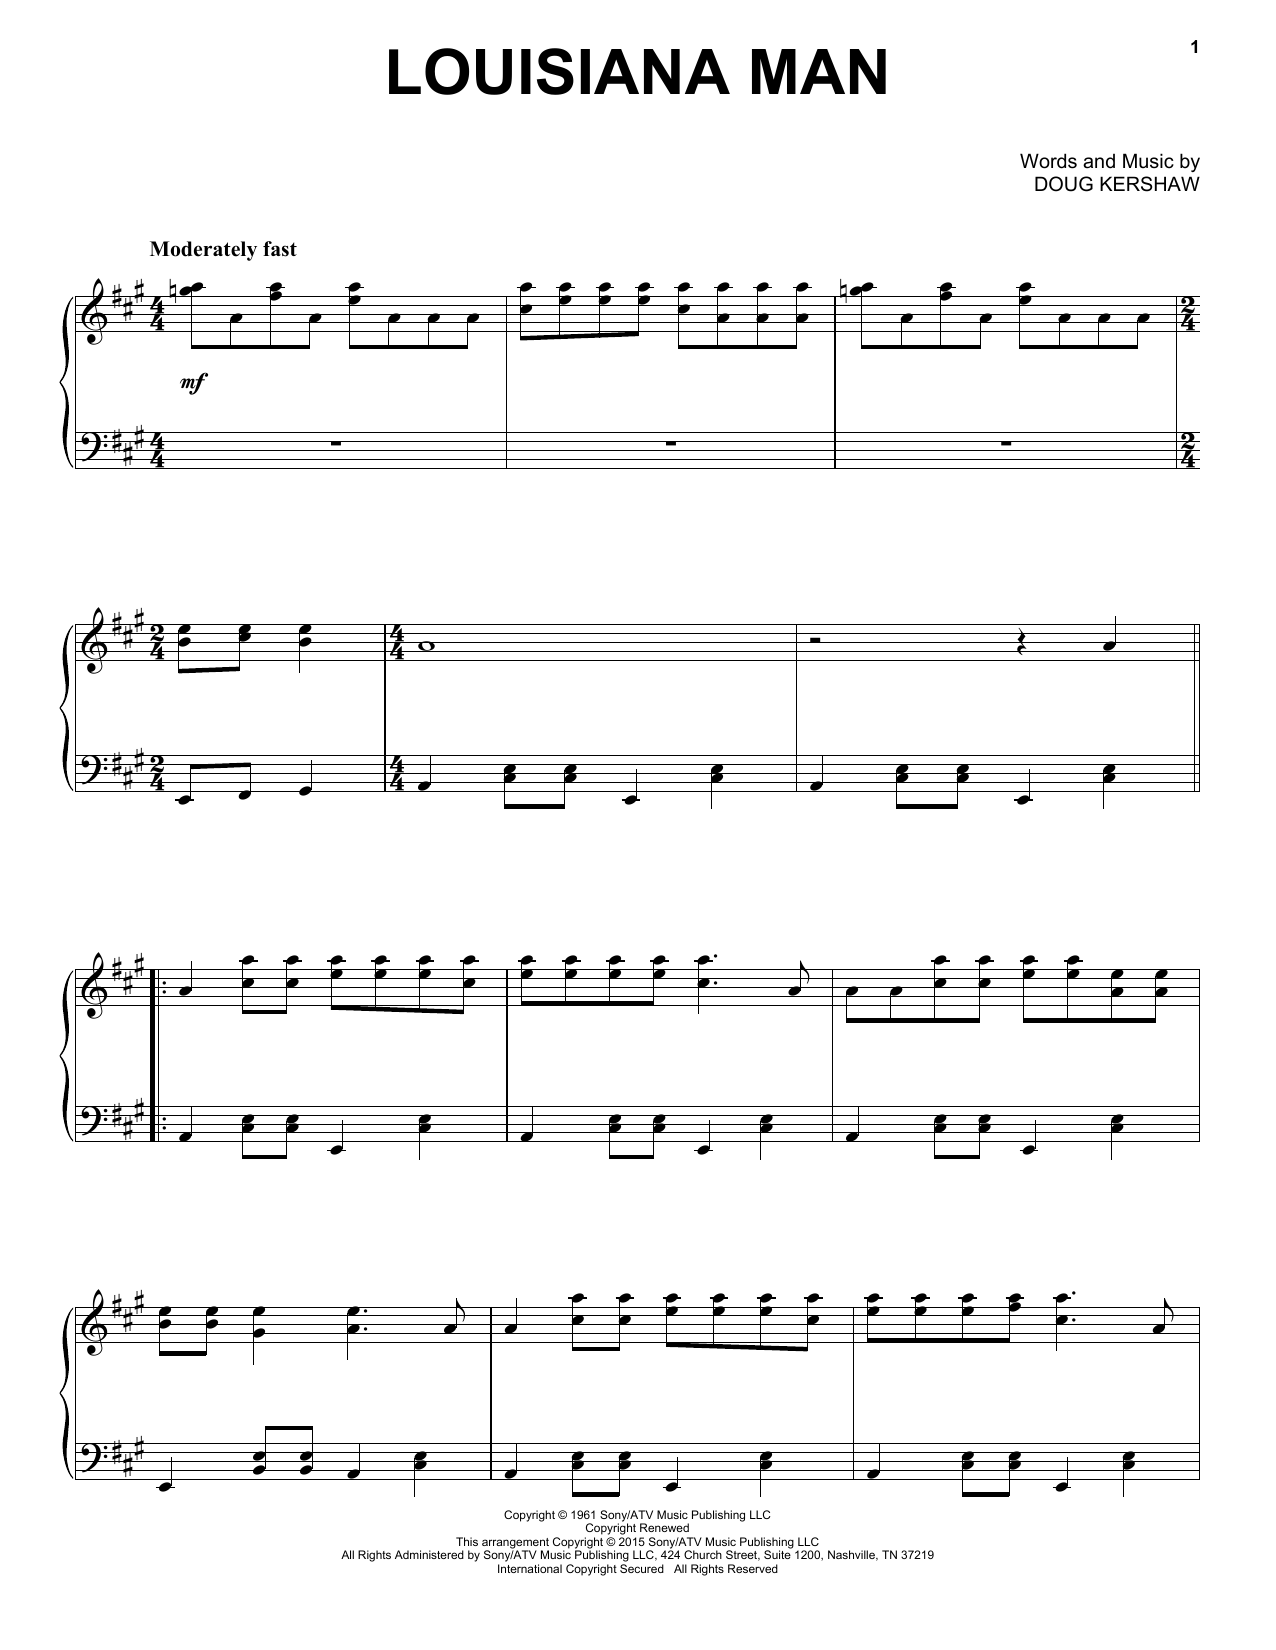 Download Doug Kershaw Louisiana Man Sheet Music and learn how to play Piano PDF digital score in minutes